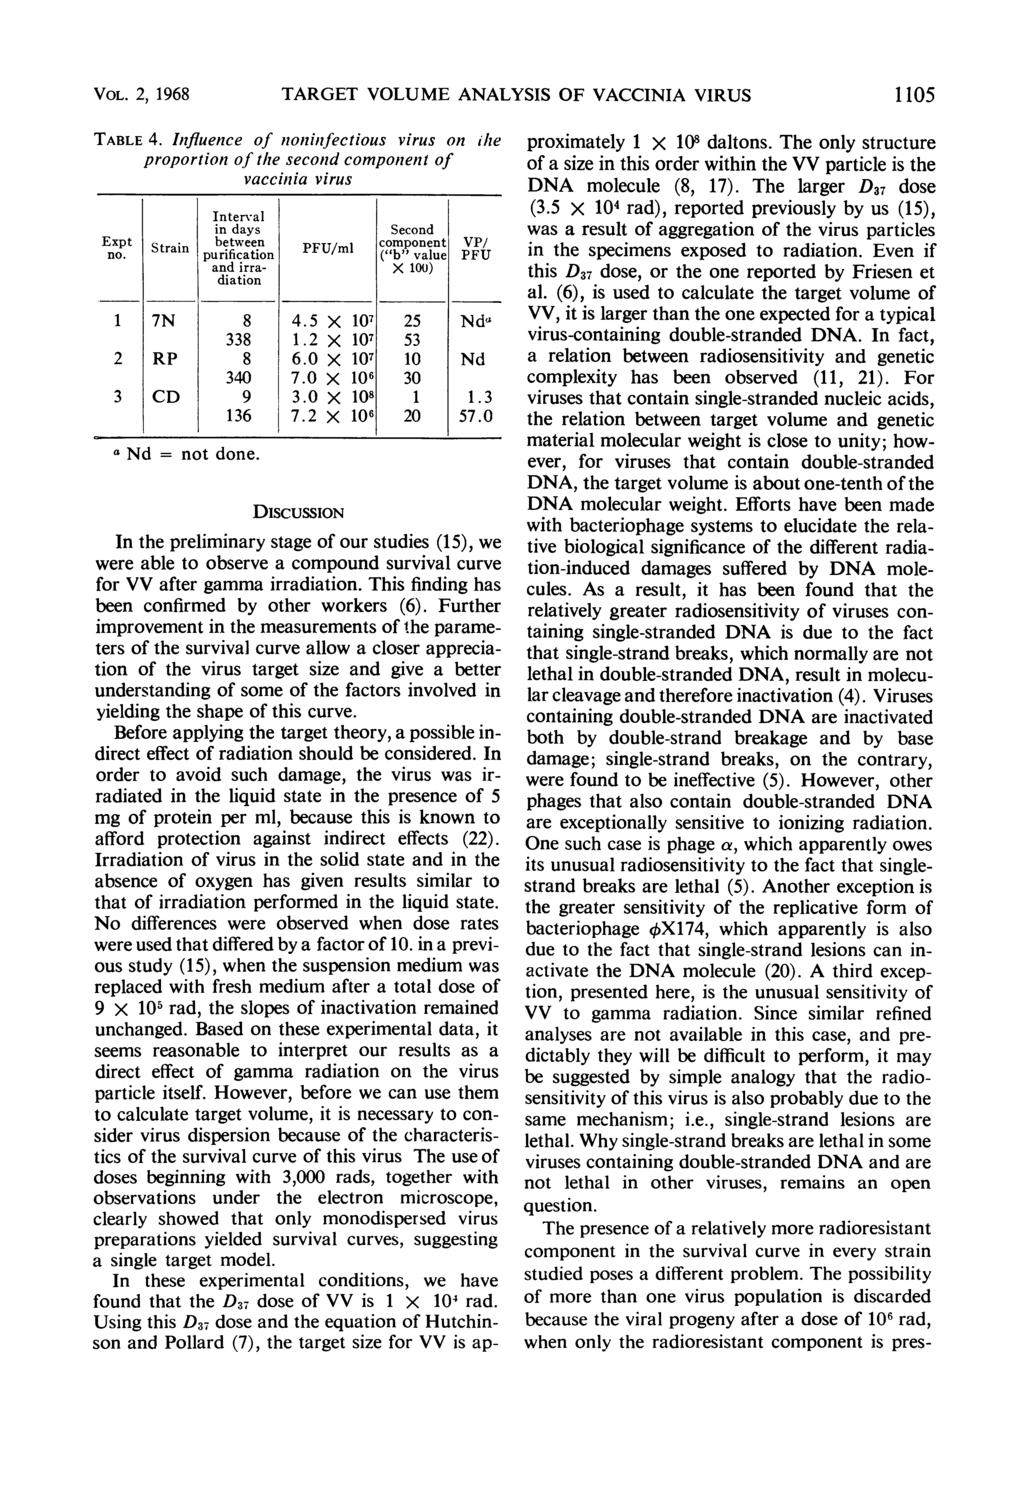 VOL. 2, 1968 TARGET VOLUME ANALYSIS OF VACCINIA VIRUS 1105 TABLE 4.